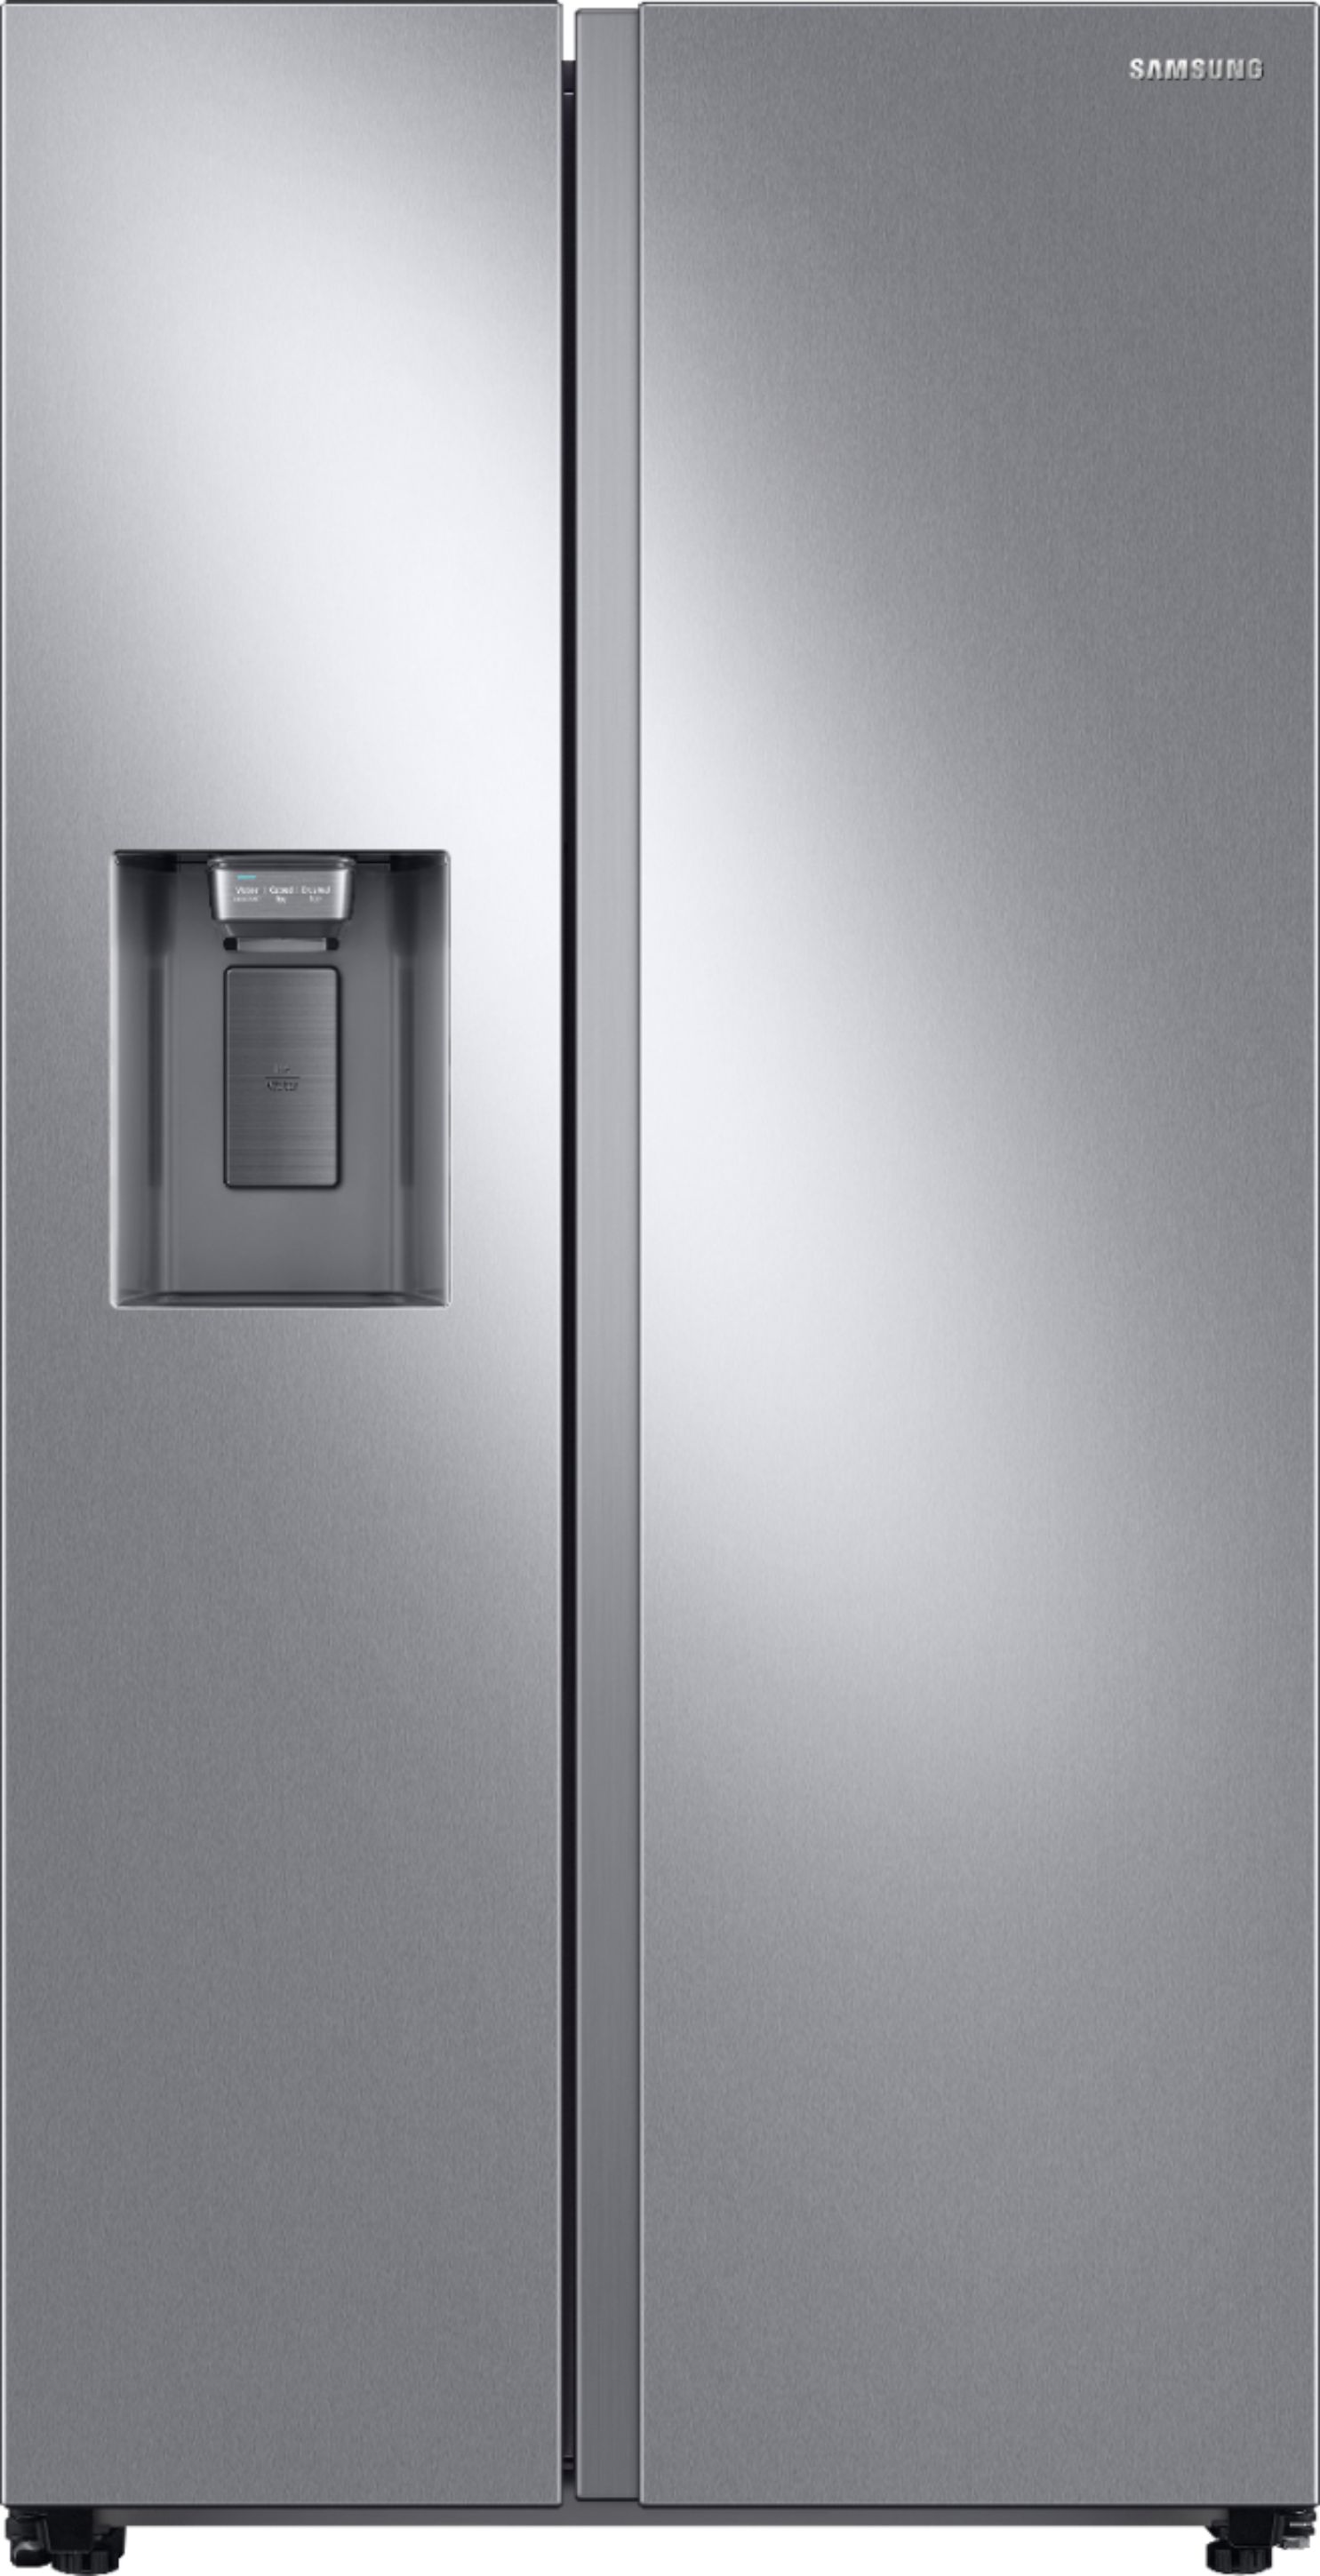 Image of Samsung RS27T5200SR refrigerator at Best Buy